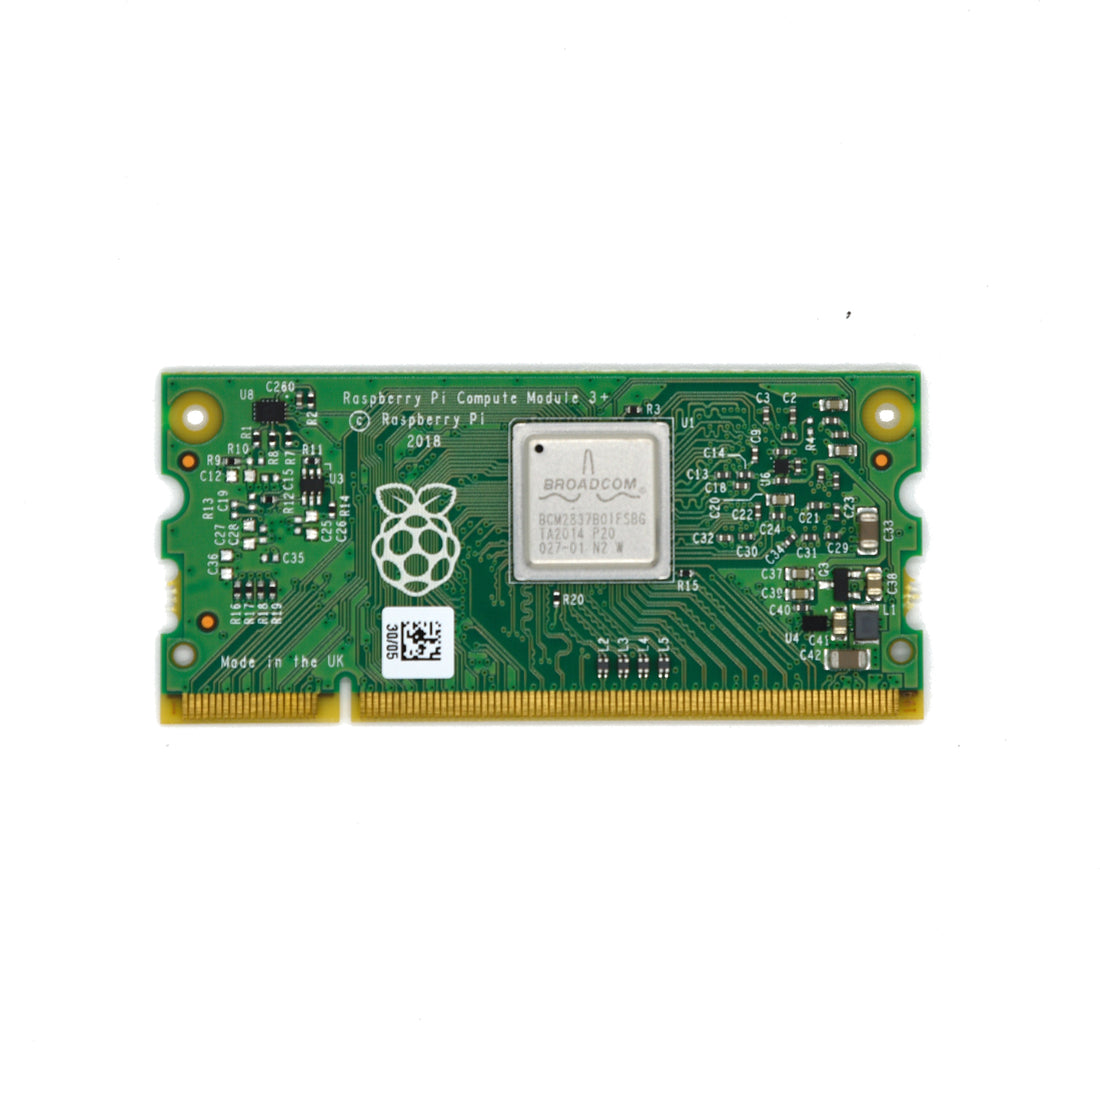 Raspberry Pi Compute Module 3+ 8GB (CM3+ 8GB)